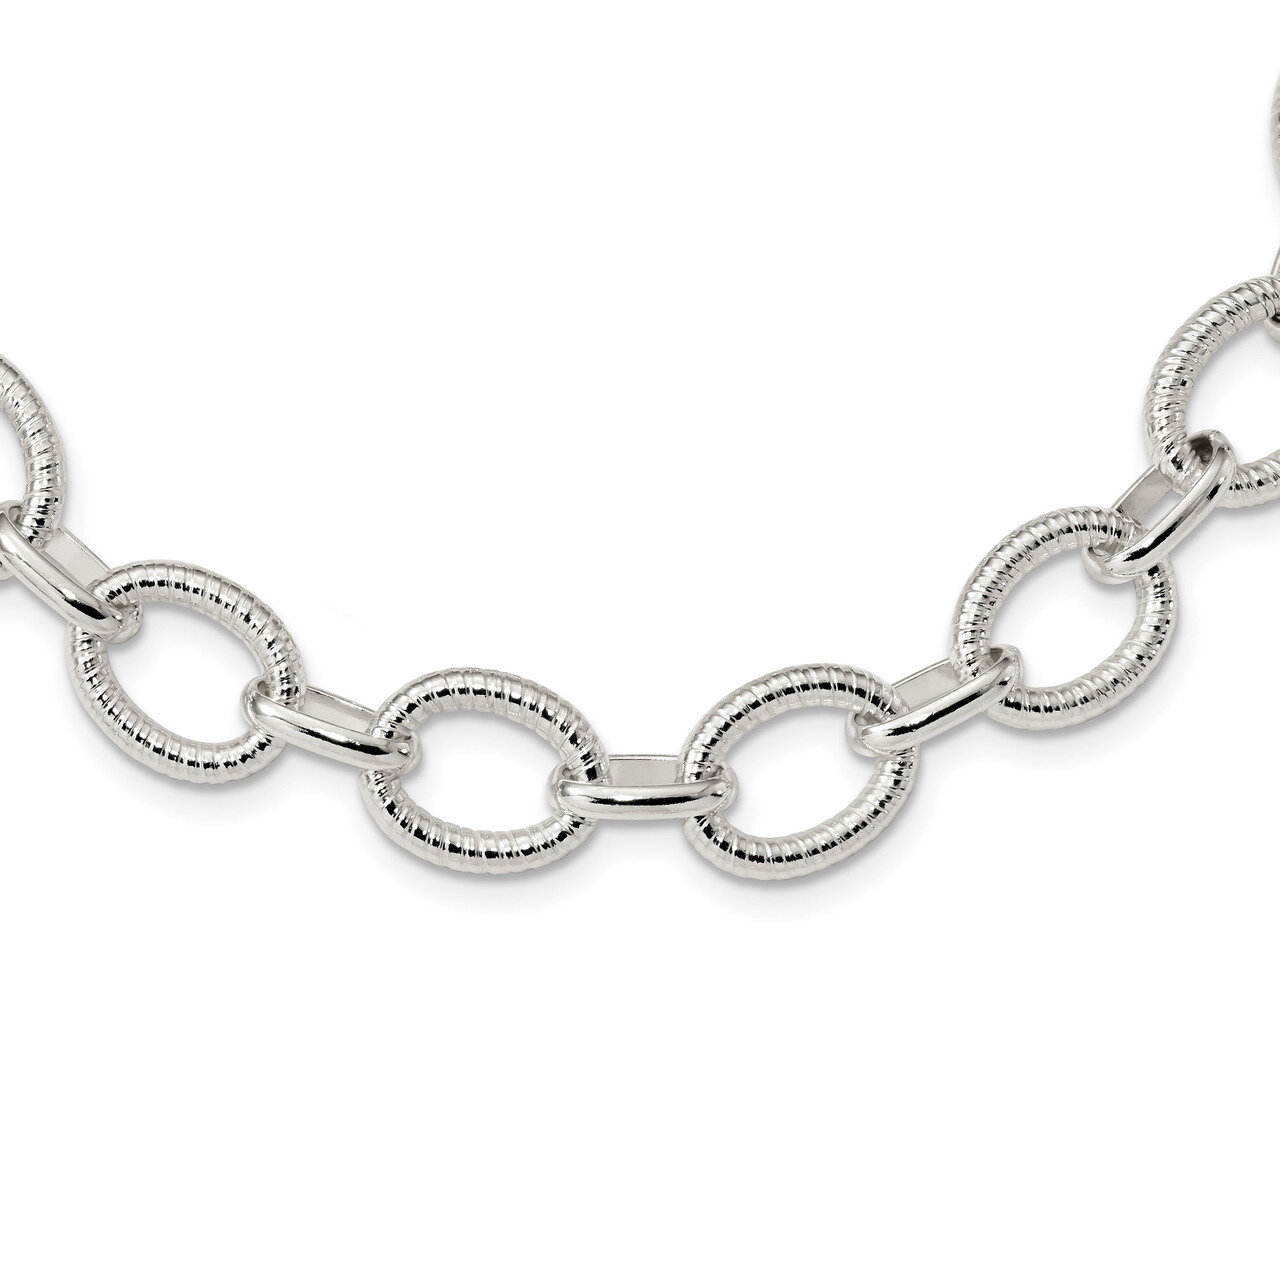 Fancy Link Necklace 18 Inch Sterling Silver Polished QG3892-18